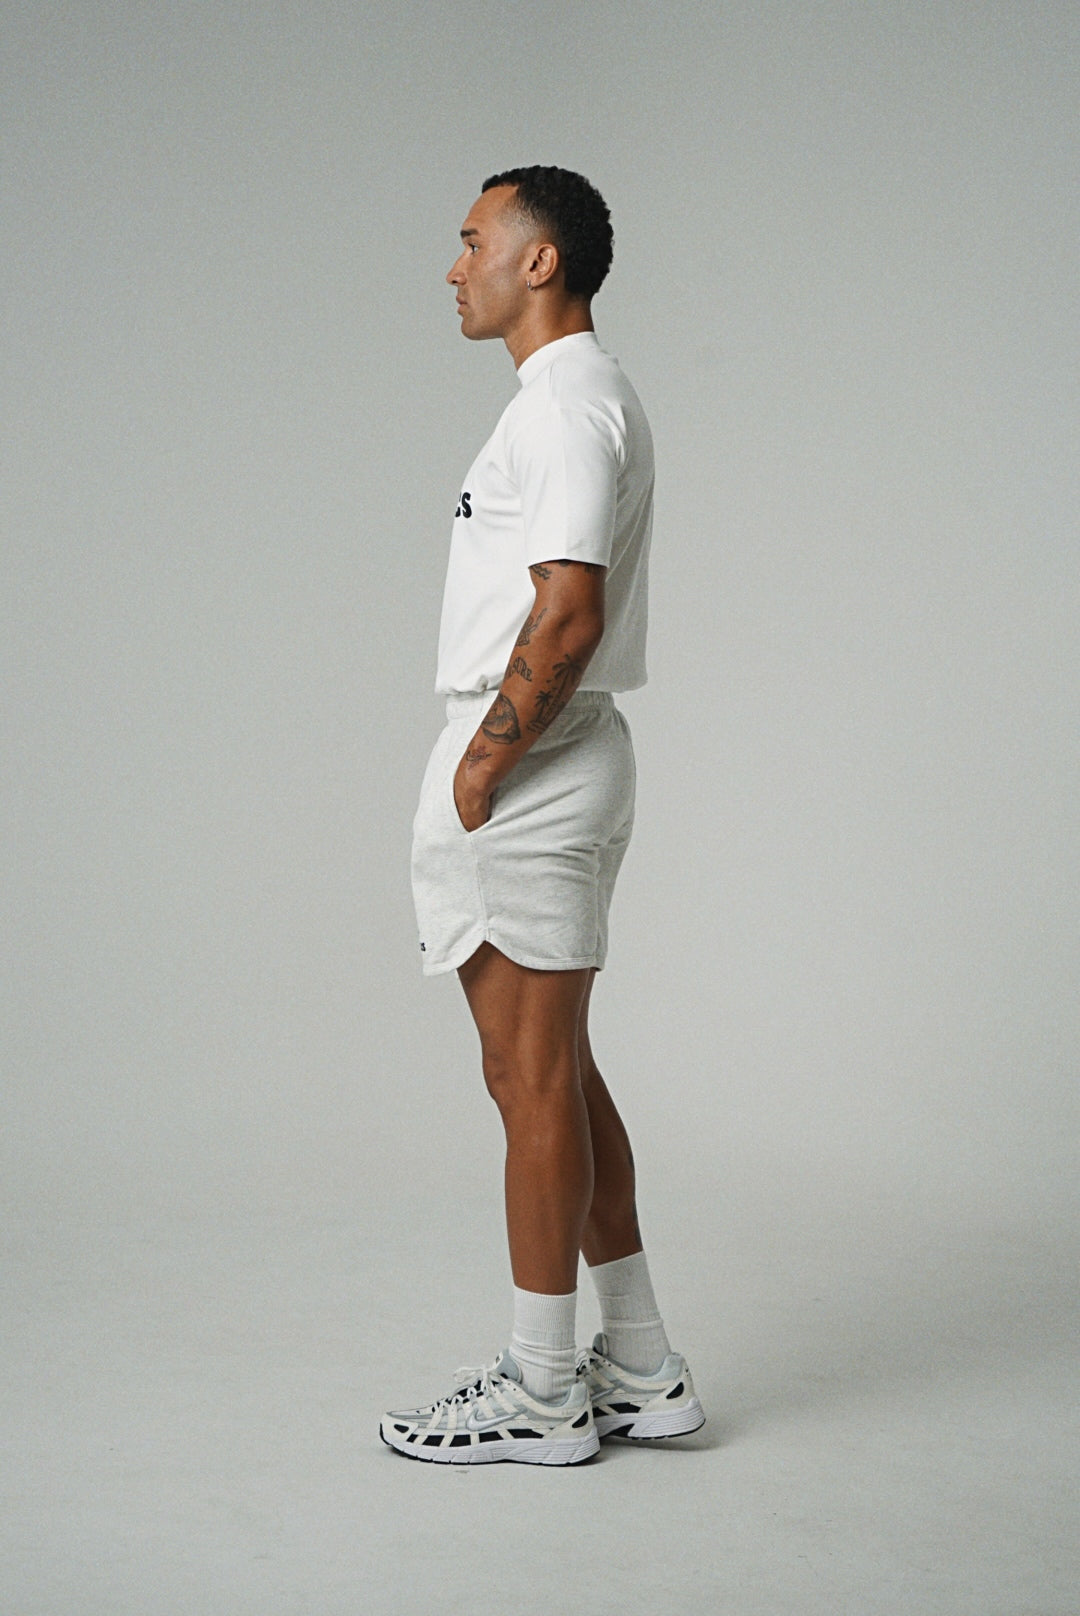 Athletics T-Shirt - Pearl White.